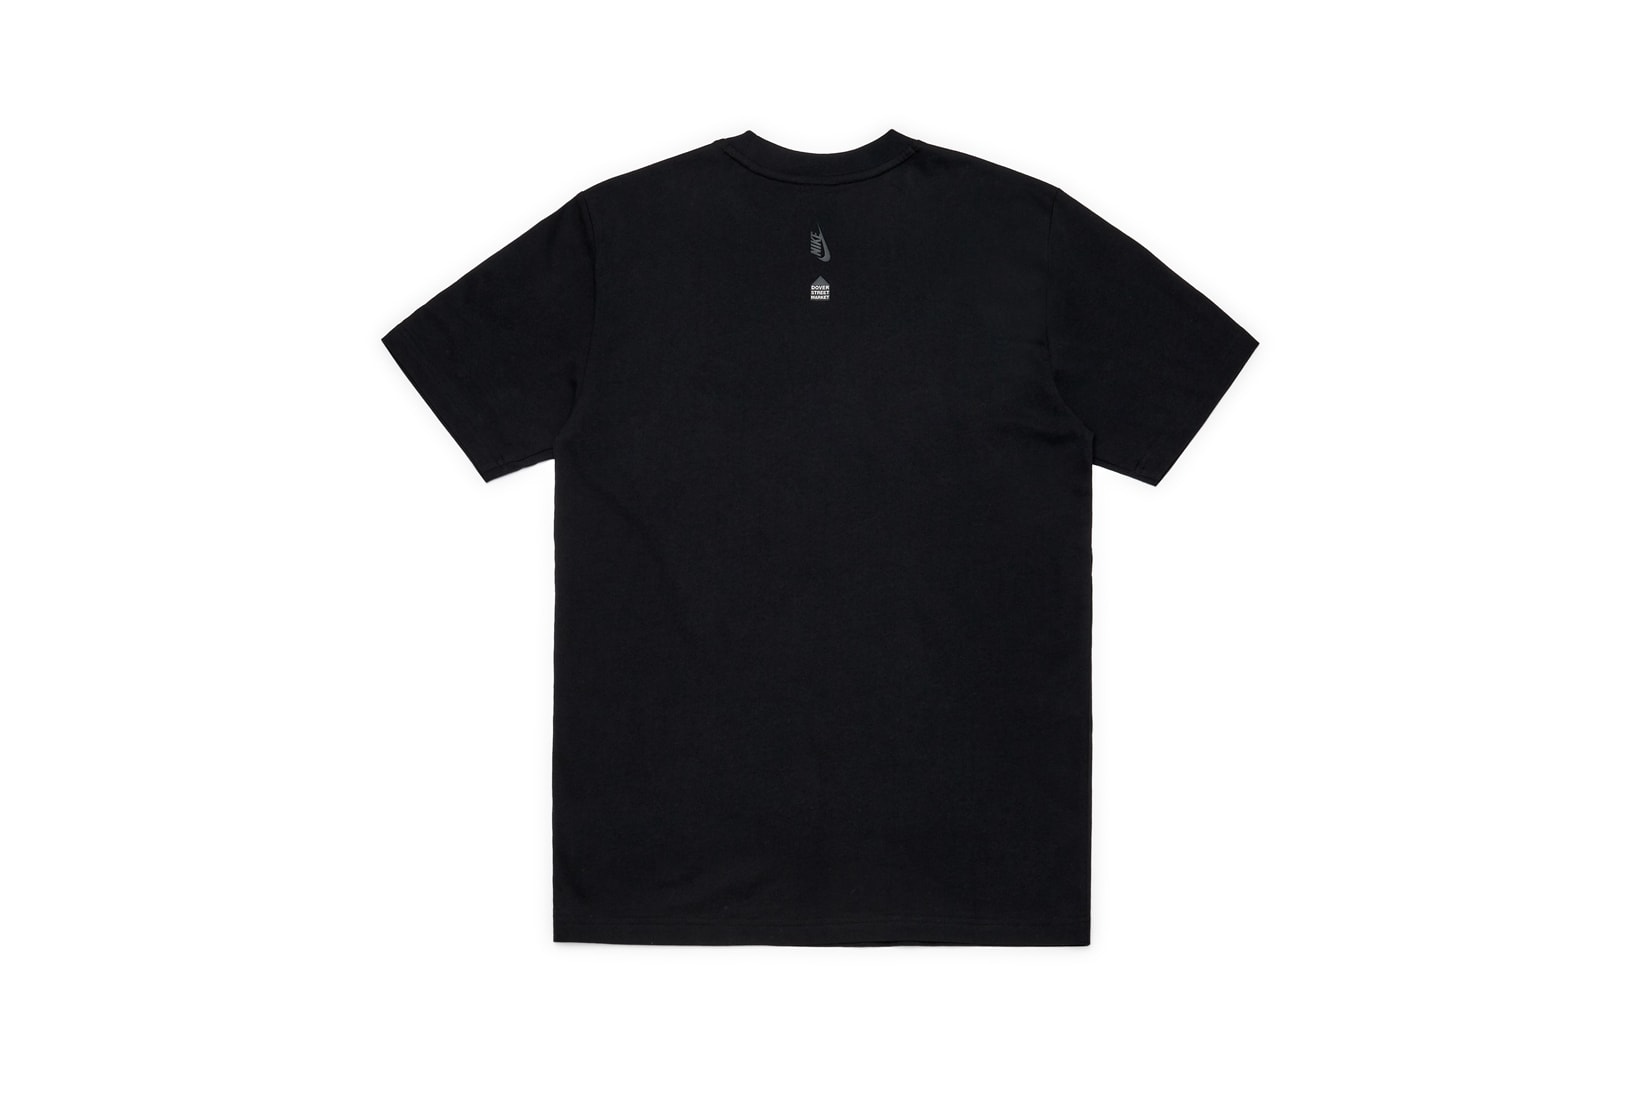 Nike x Dover Street Market Just Do It T-shirt Black